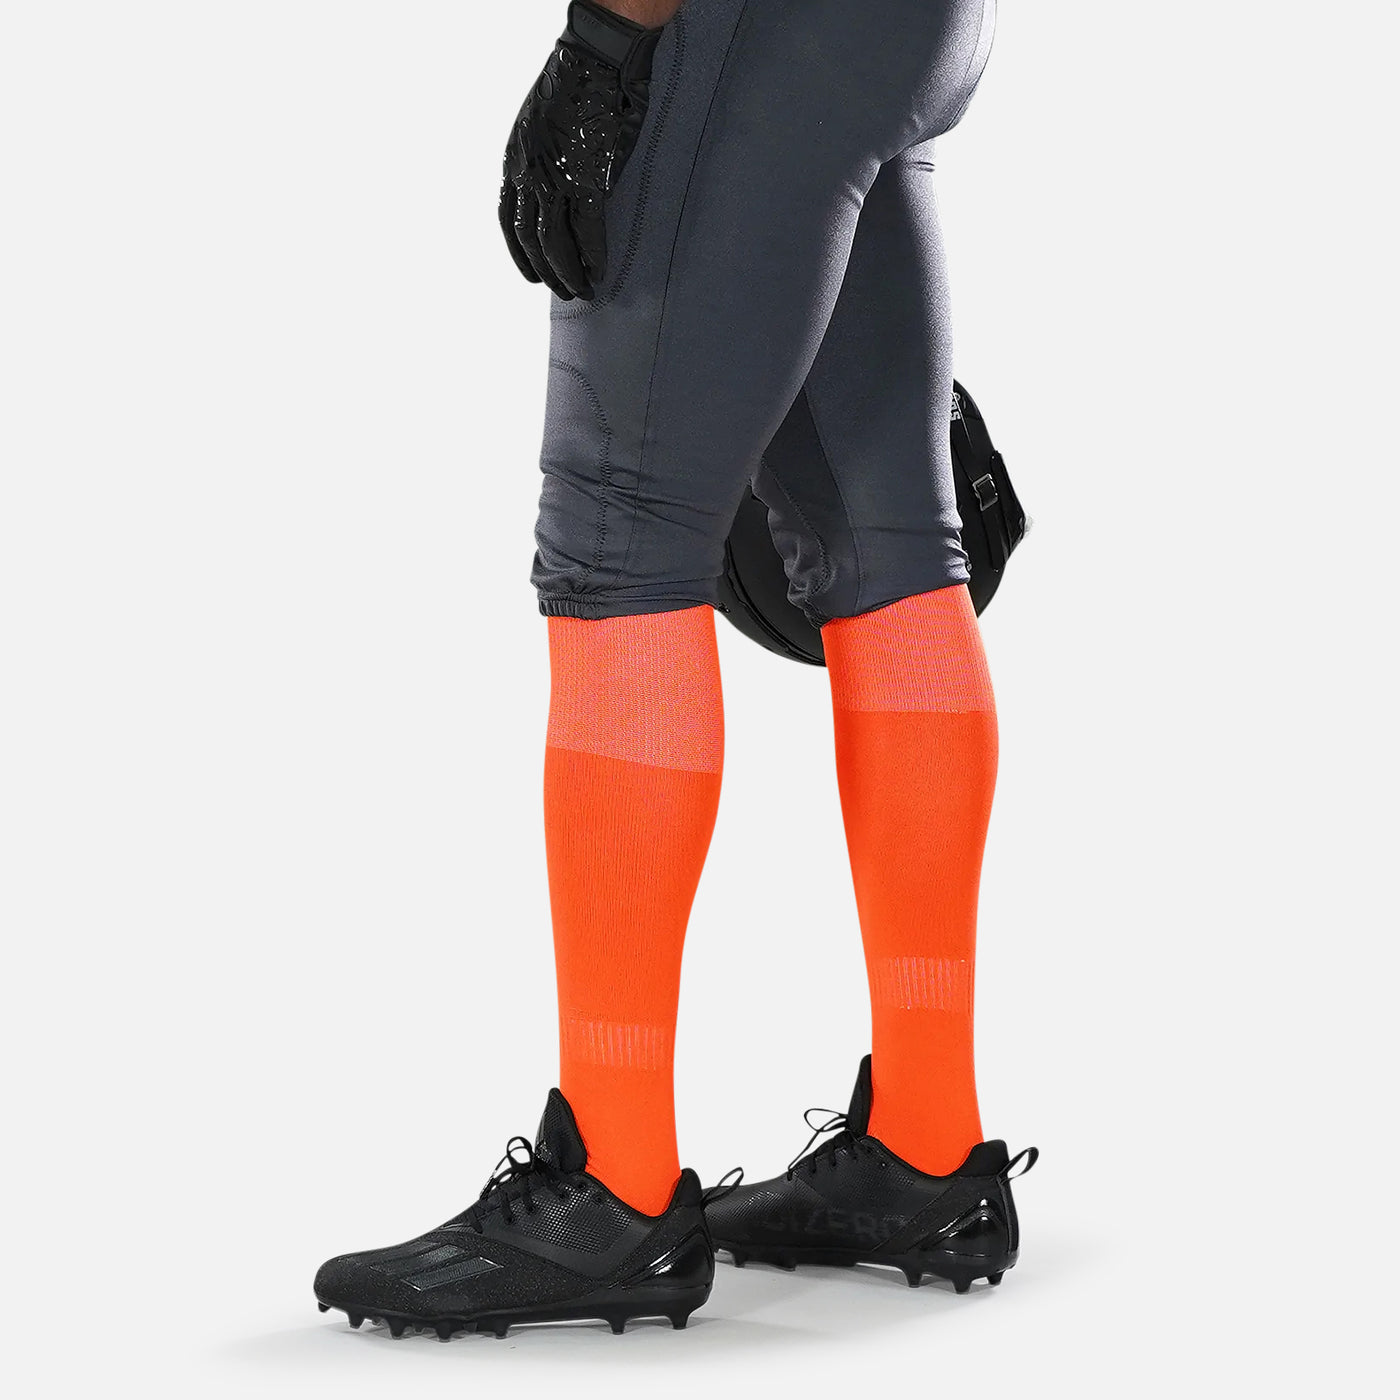 Hue Orange Over The Knee Sport Socks